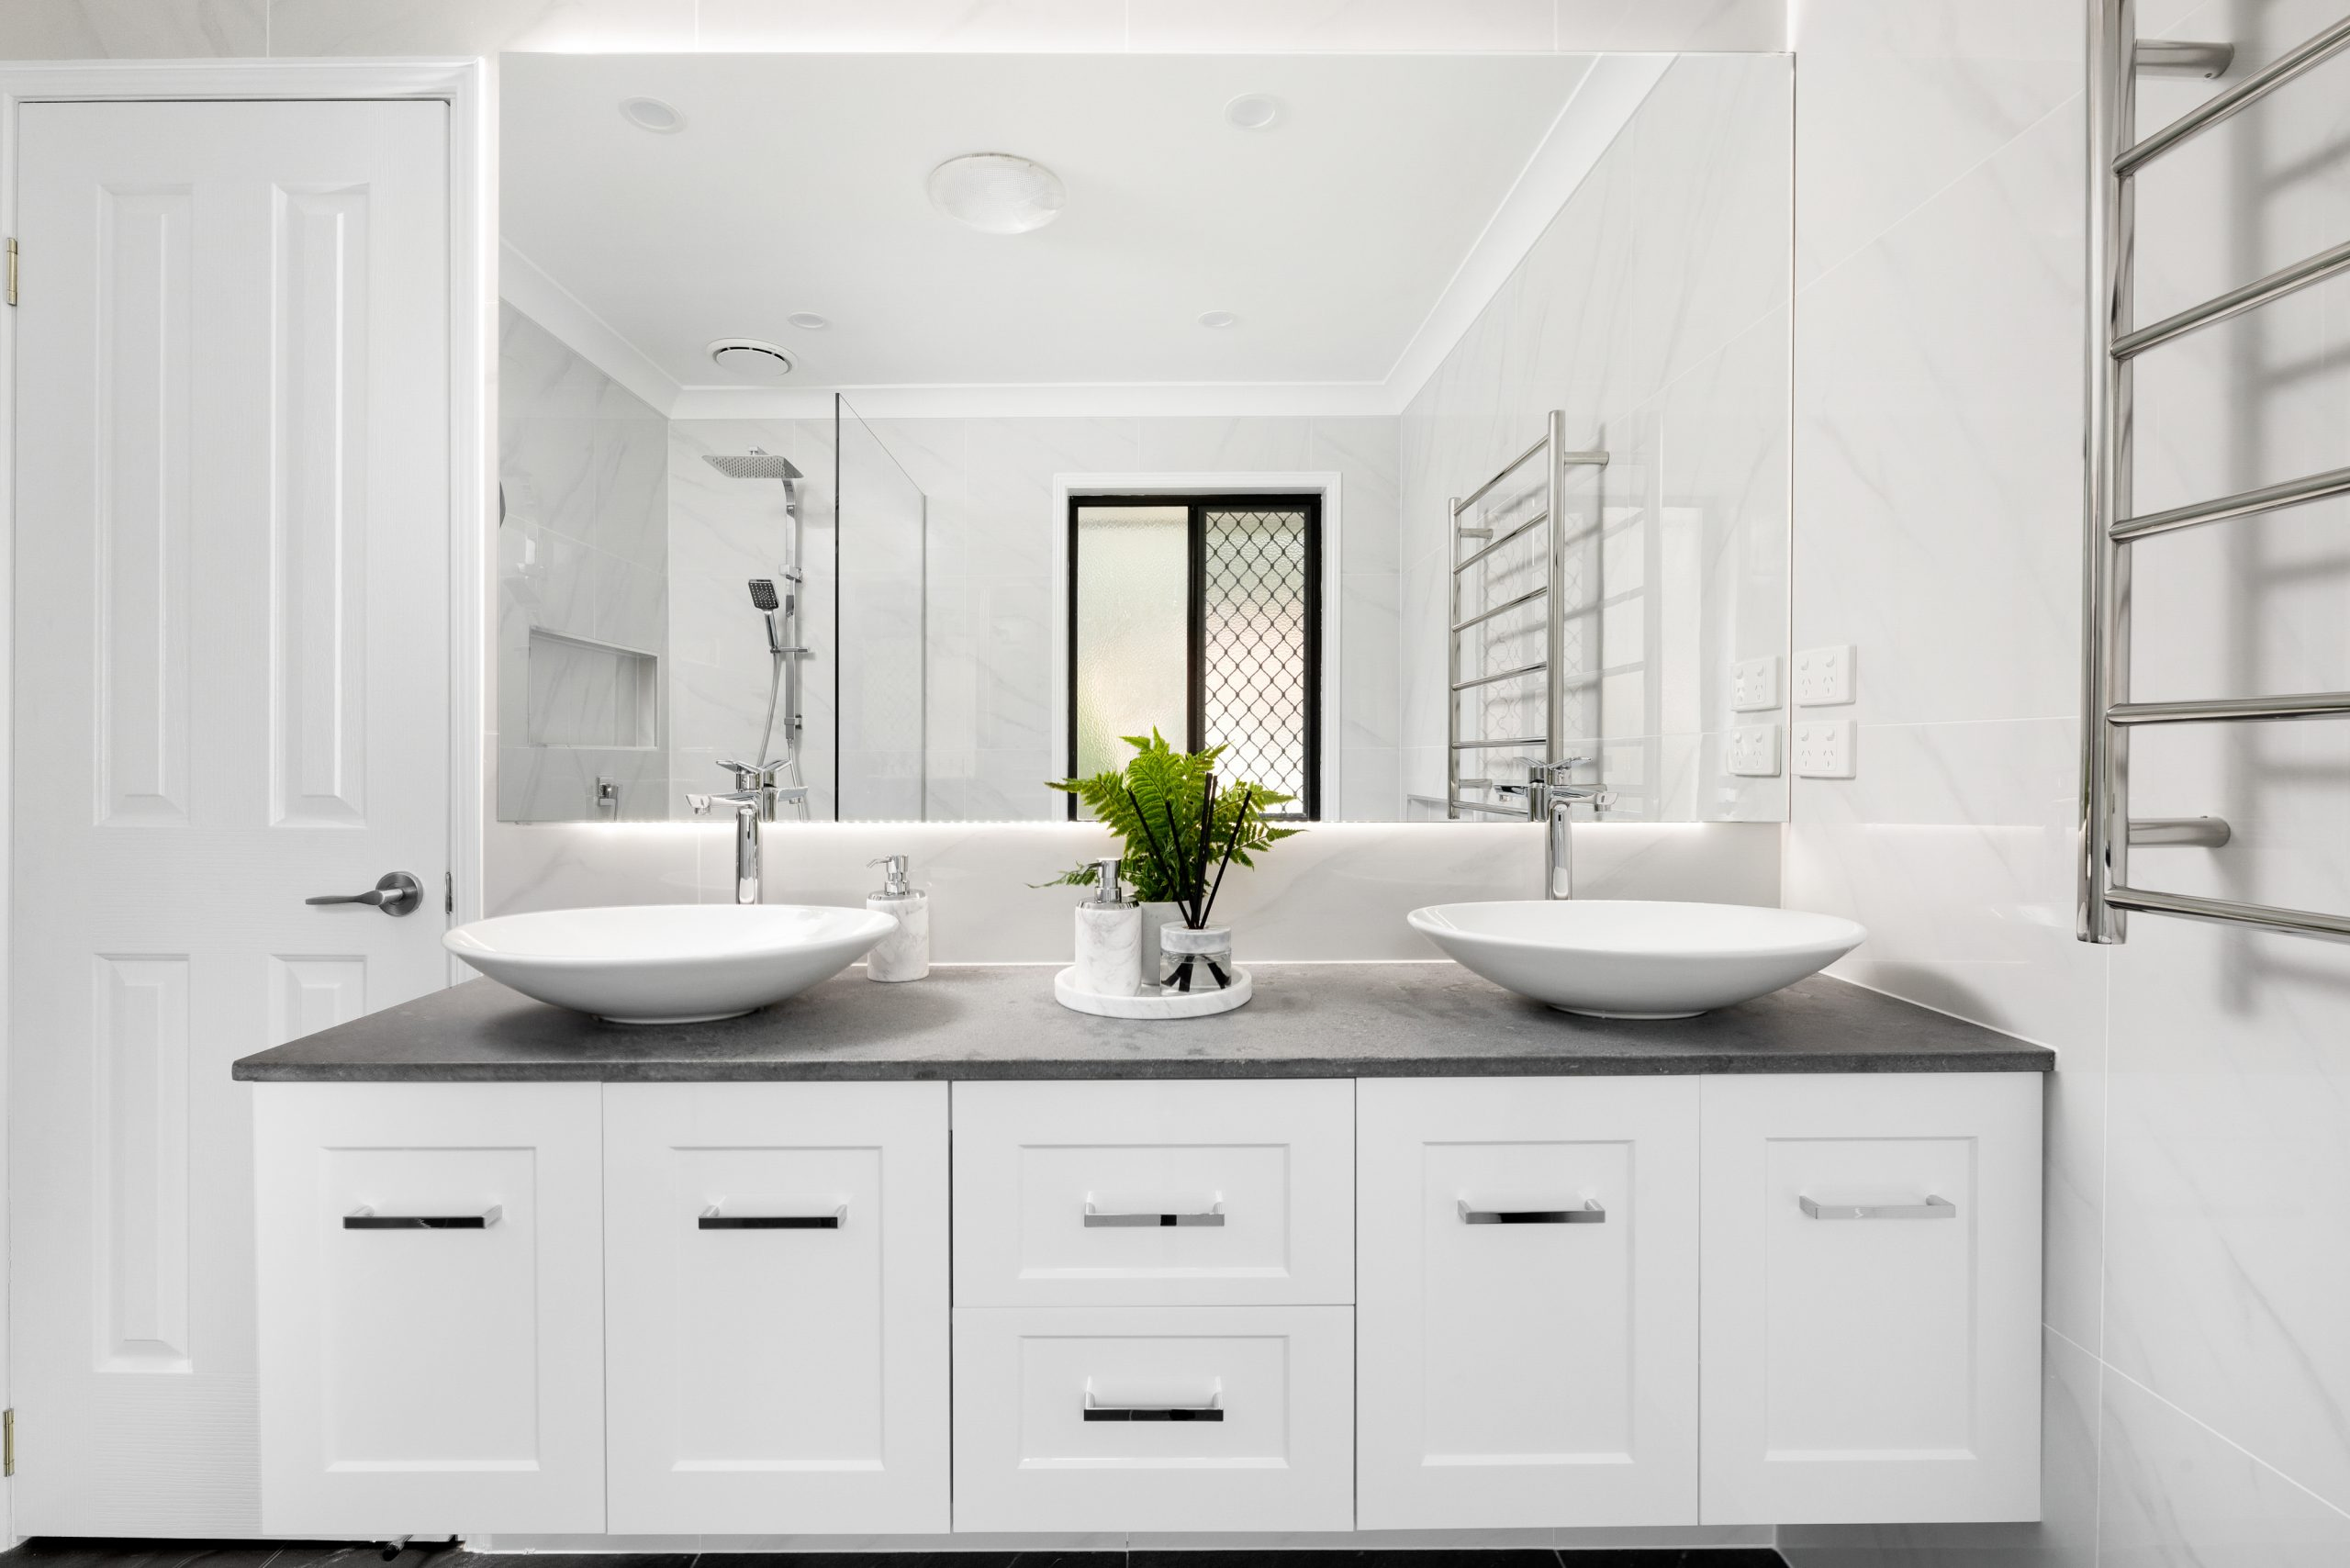 Bright, white bathroom with chrome details